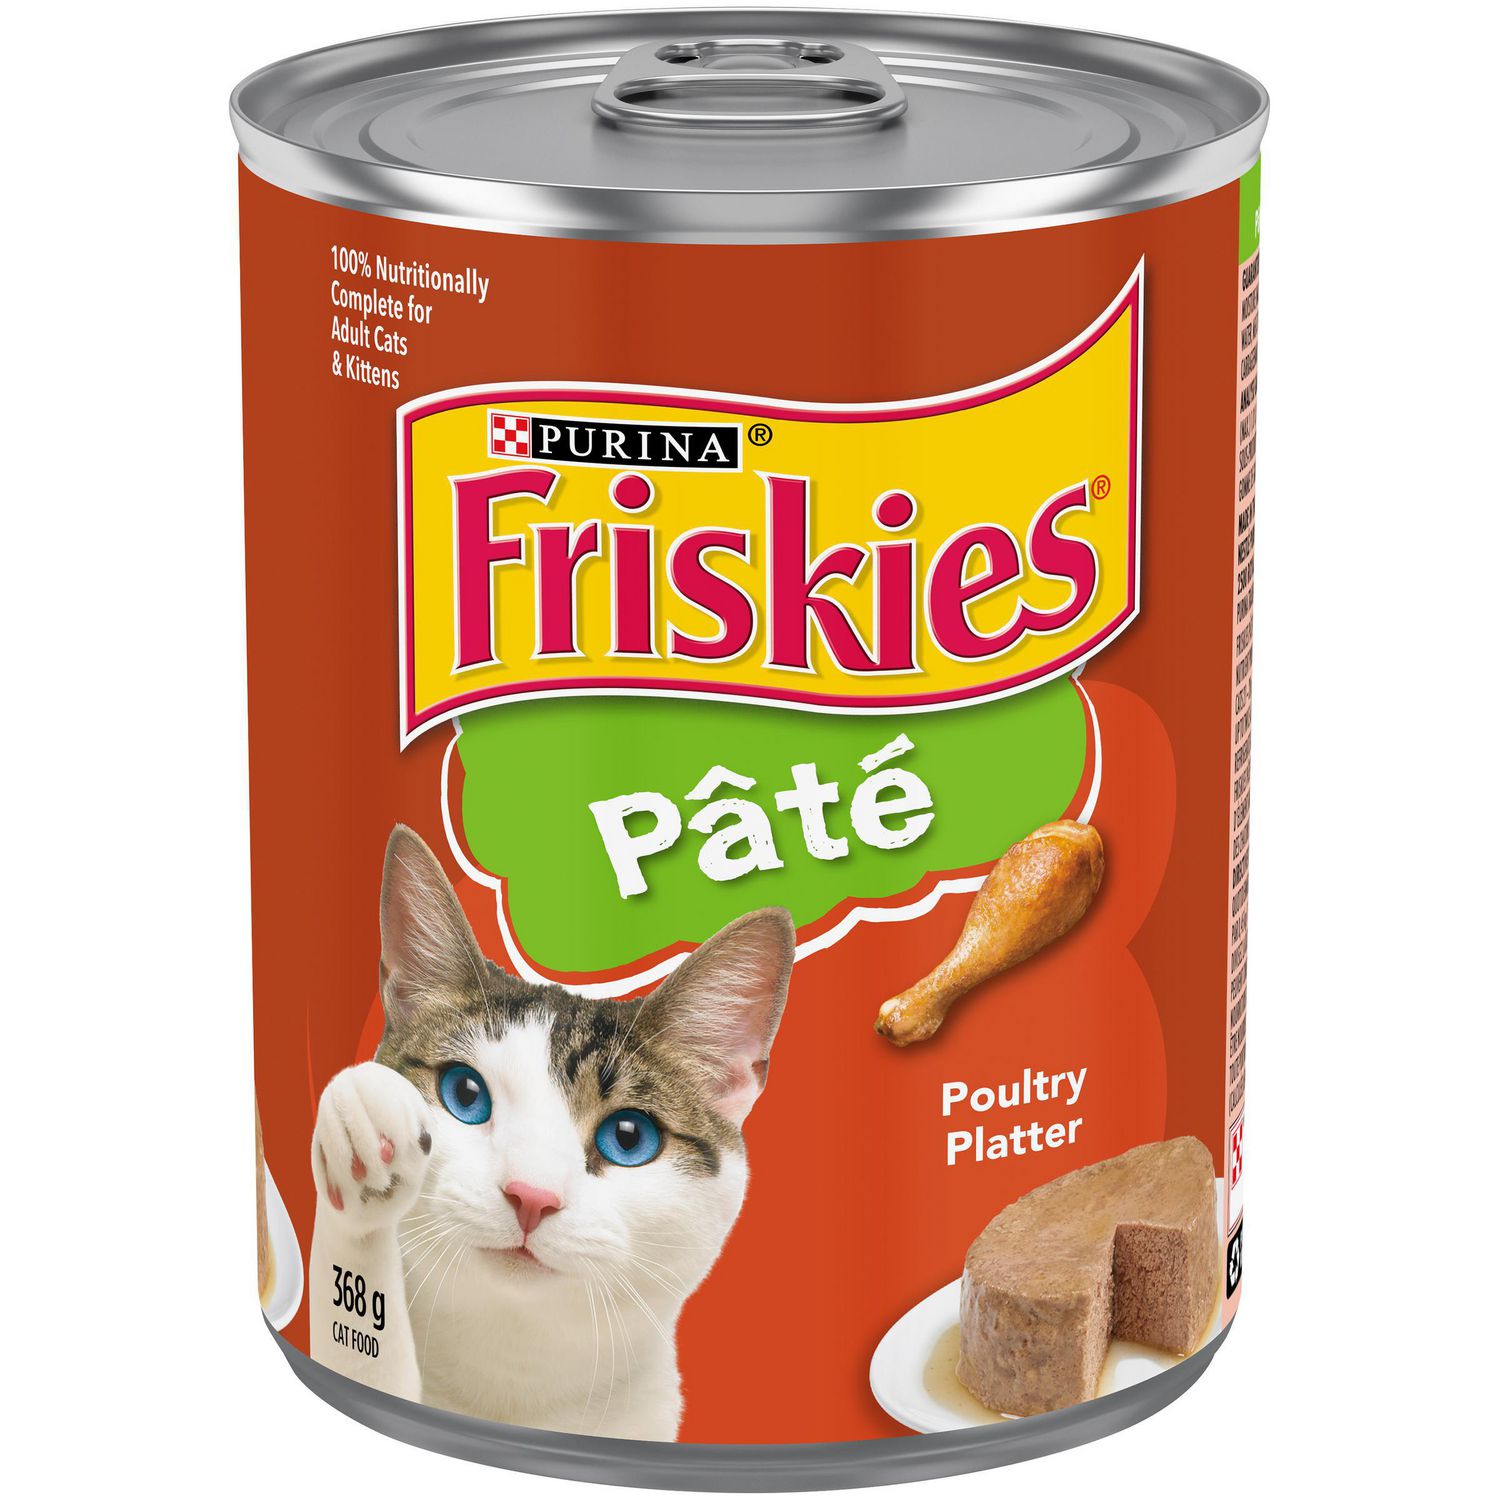 Friskies Pate Wet Cat Food; Poultry Platter Walmart Canada